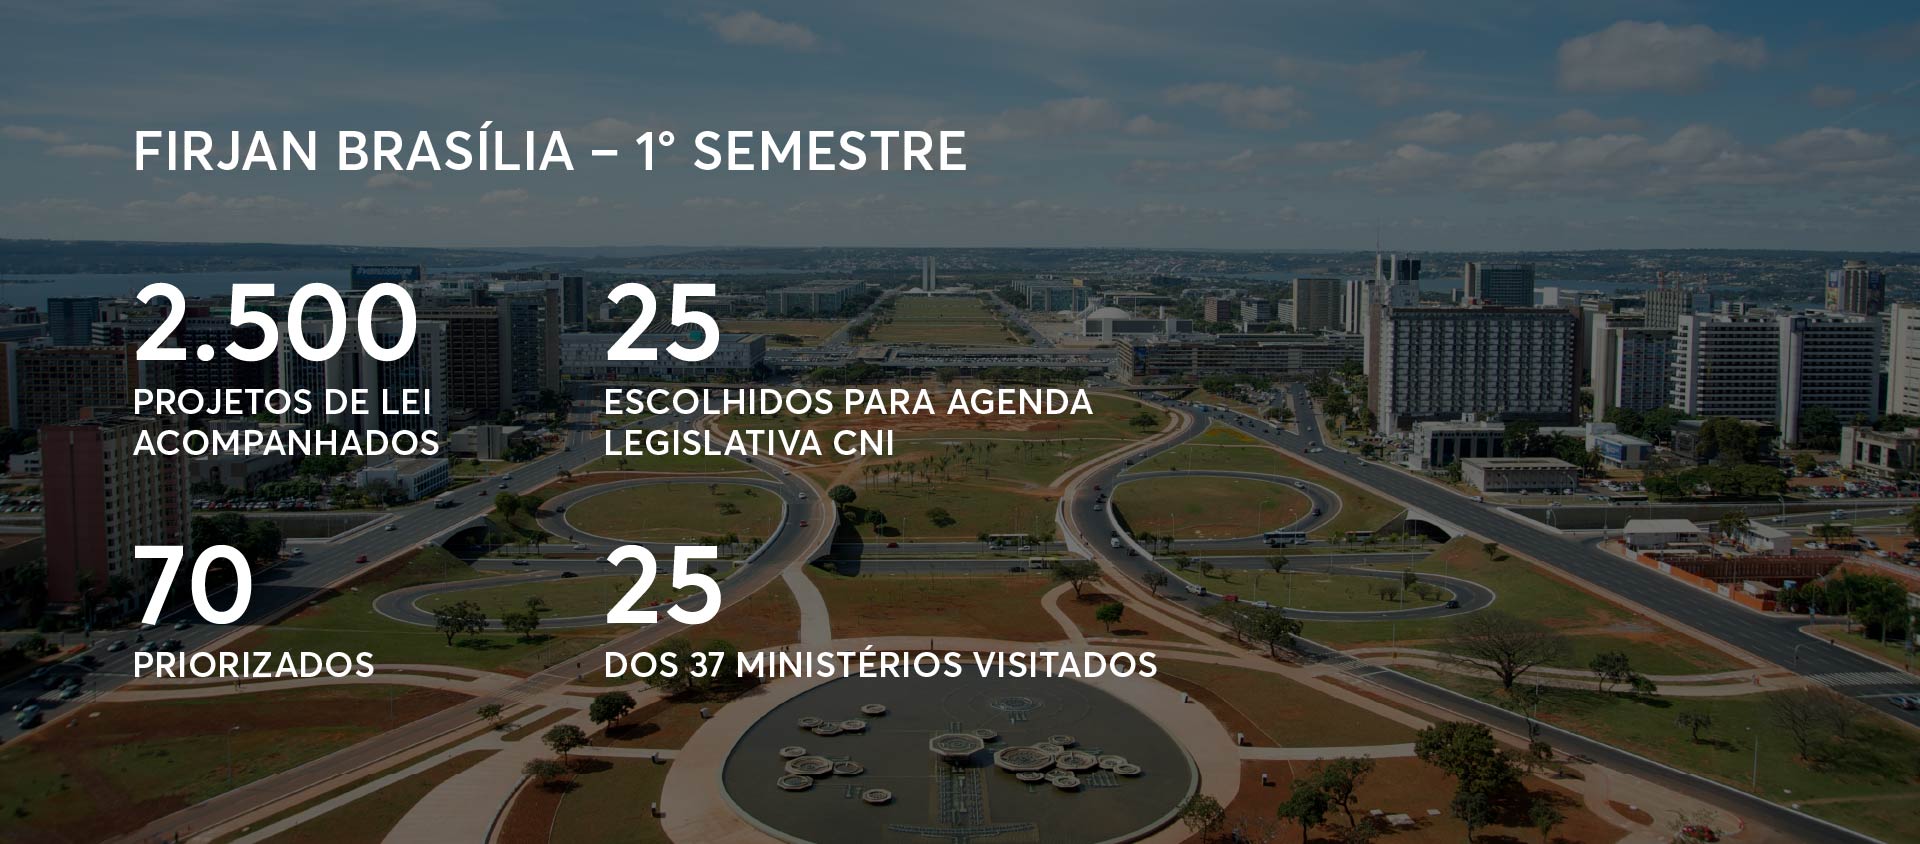 Firjan Brasília